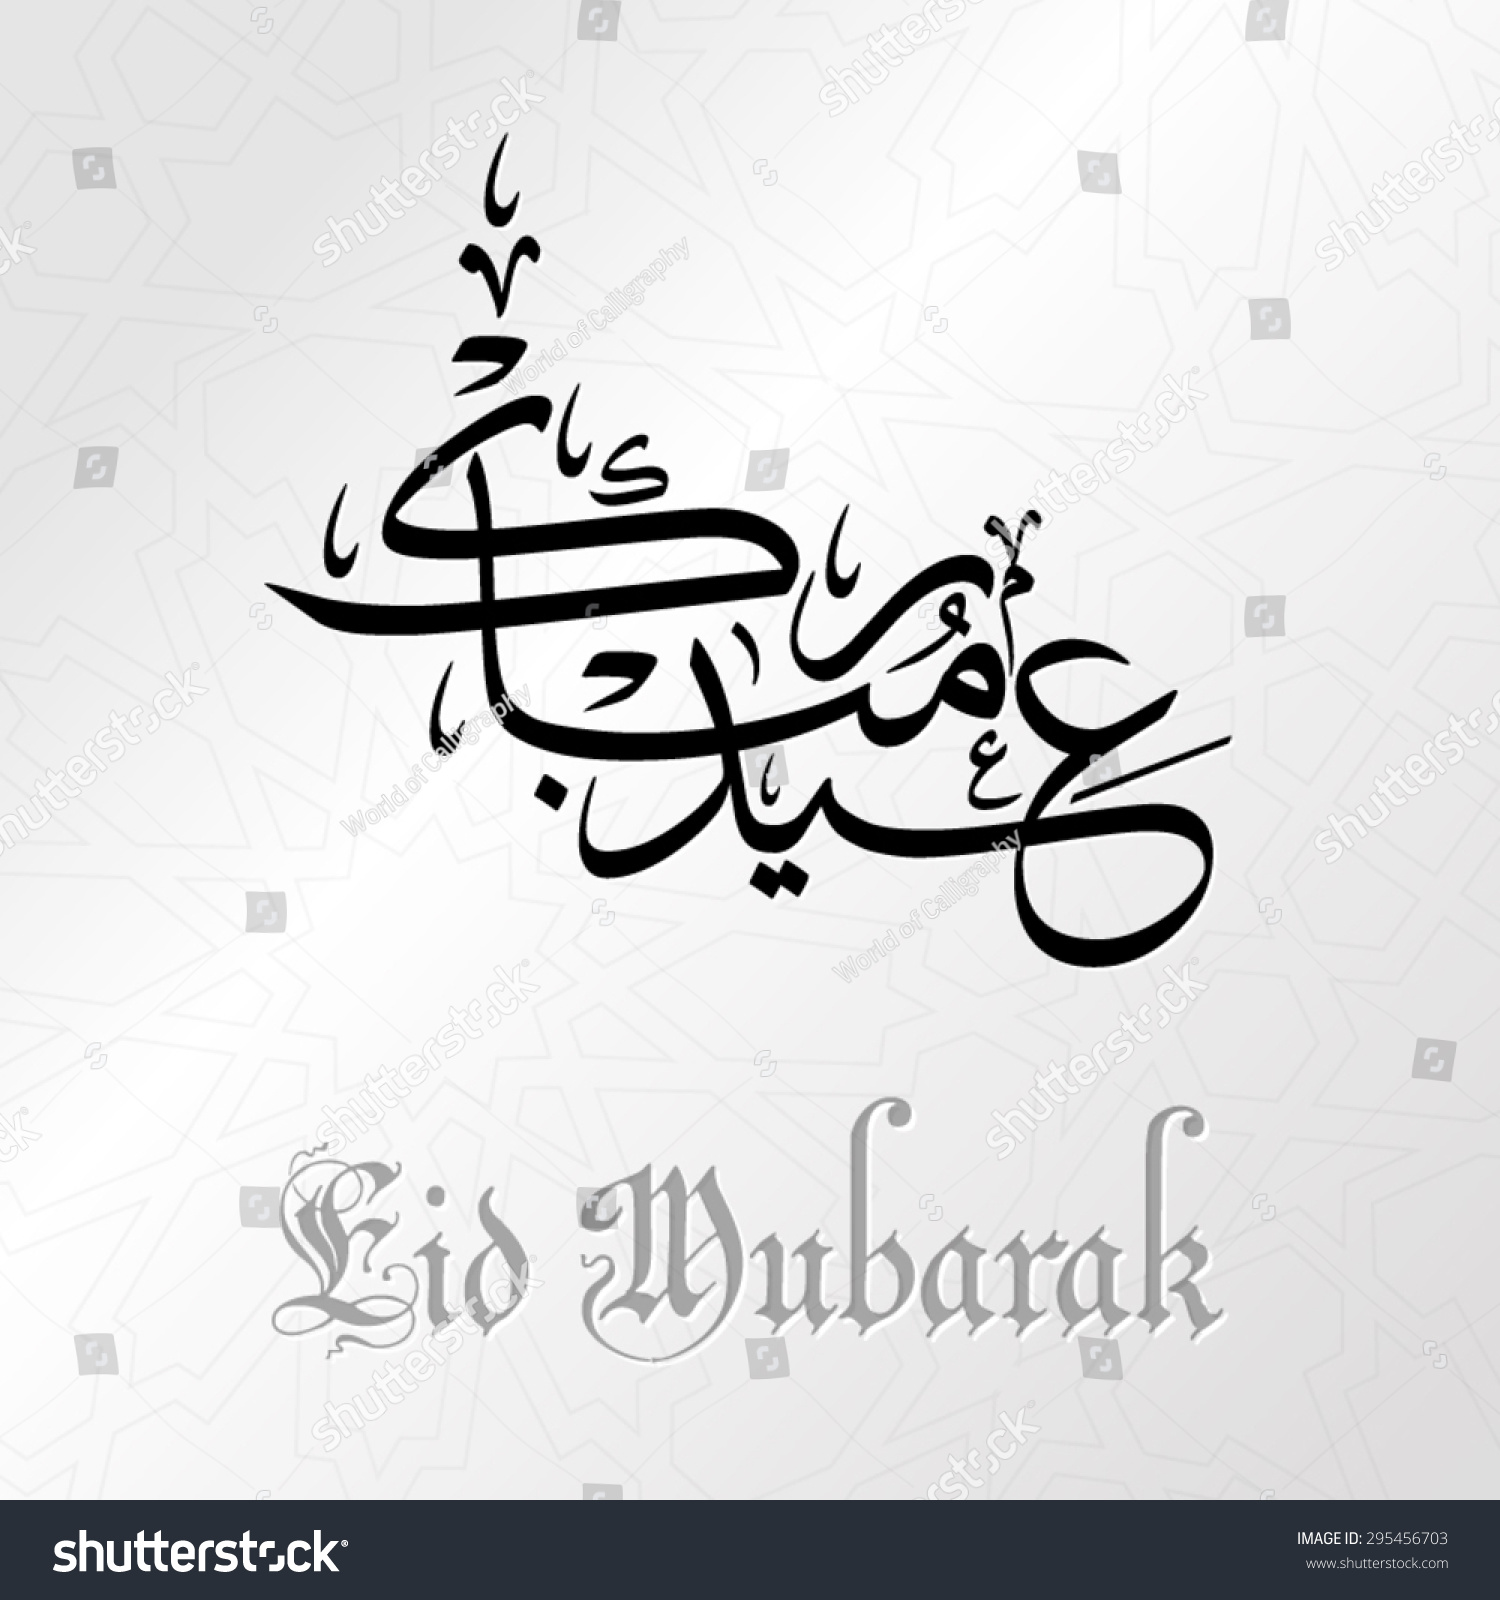 Eid Mubarak Wishes Word In Arabic Calligraphy Royalty Free Stock Vector 295456703 Avopix Com